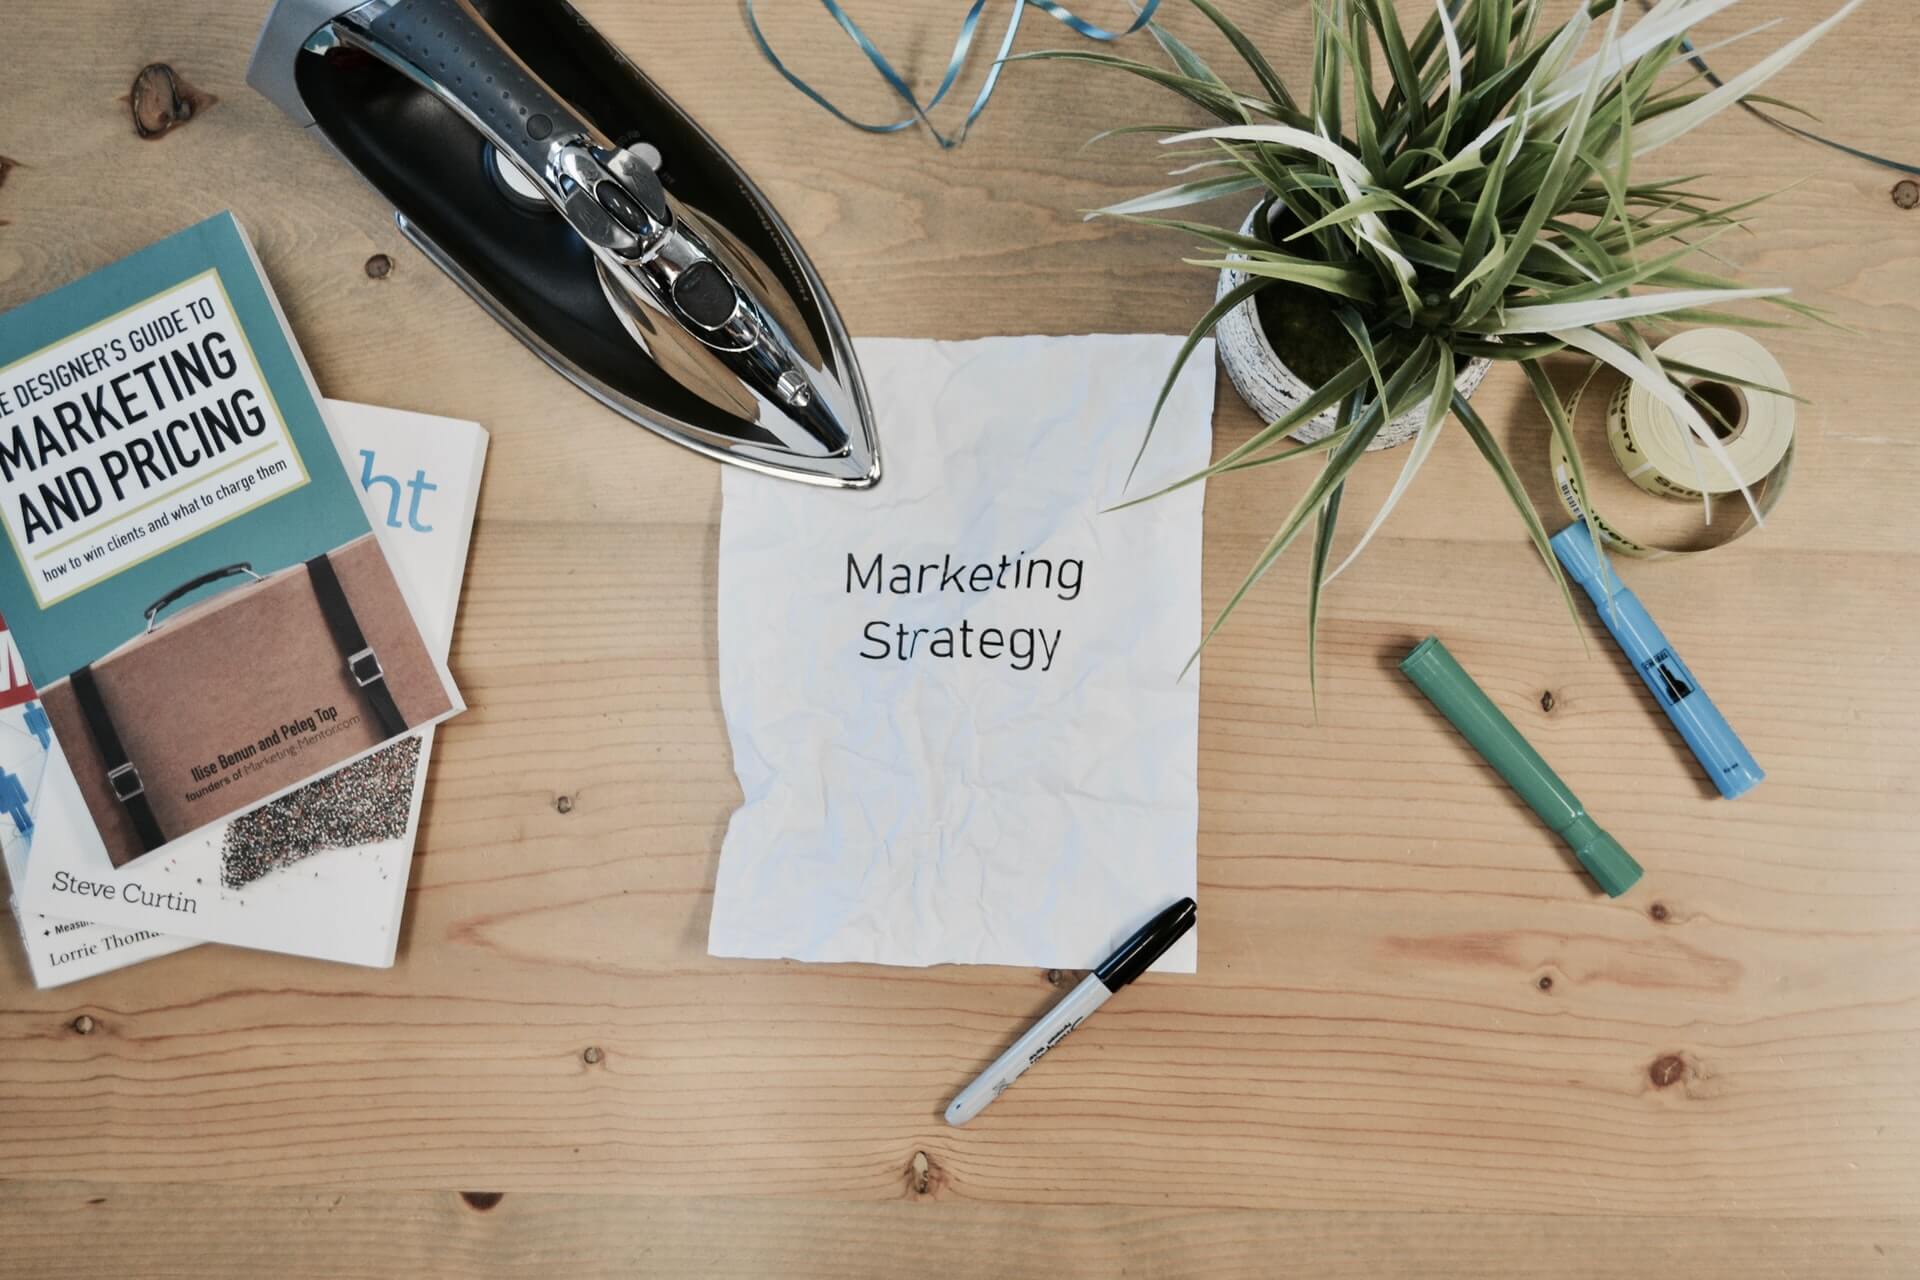 Marketing: Planning and Strategizing